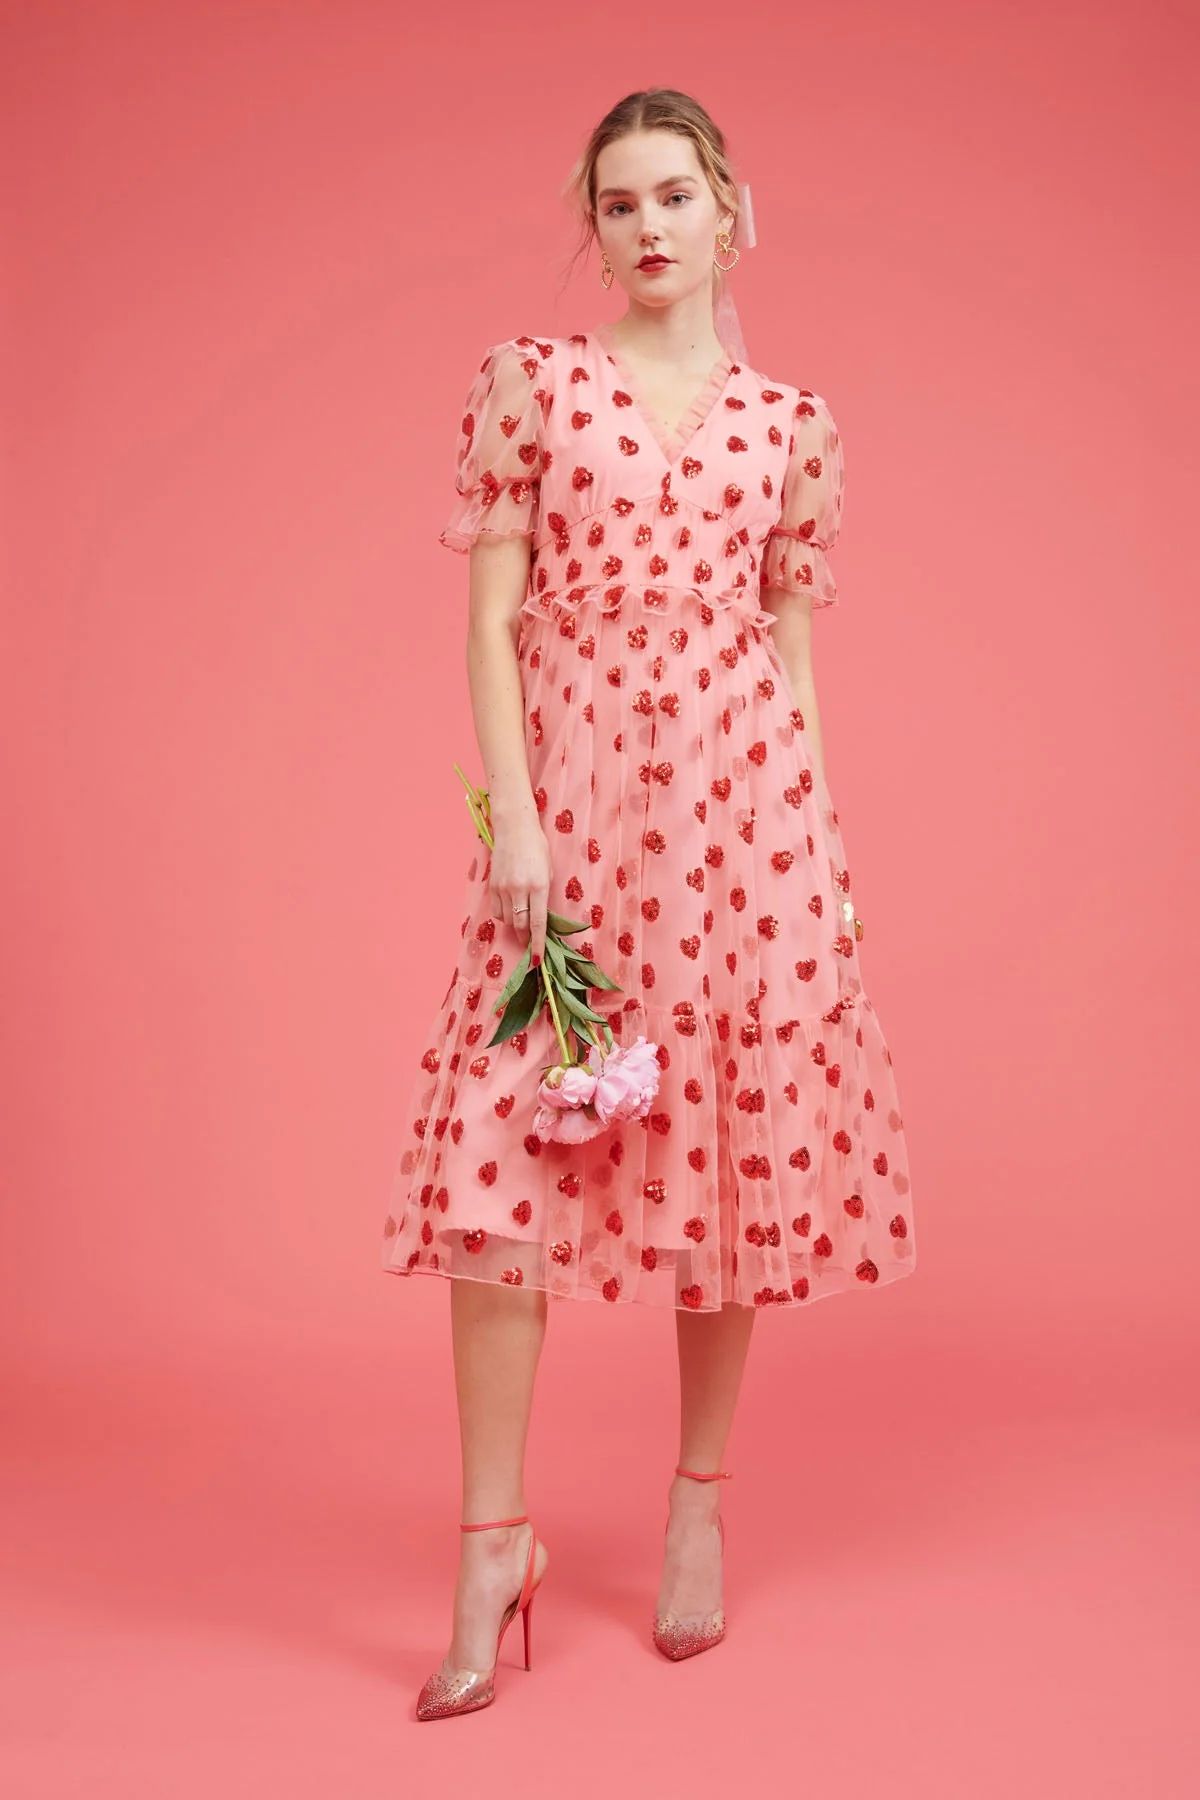 Sequin Heart Tulle Dress | Rachel Parcell